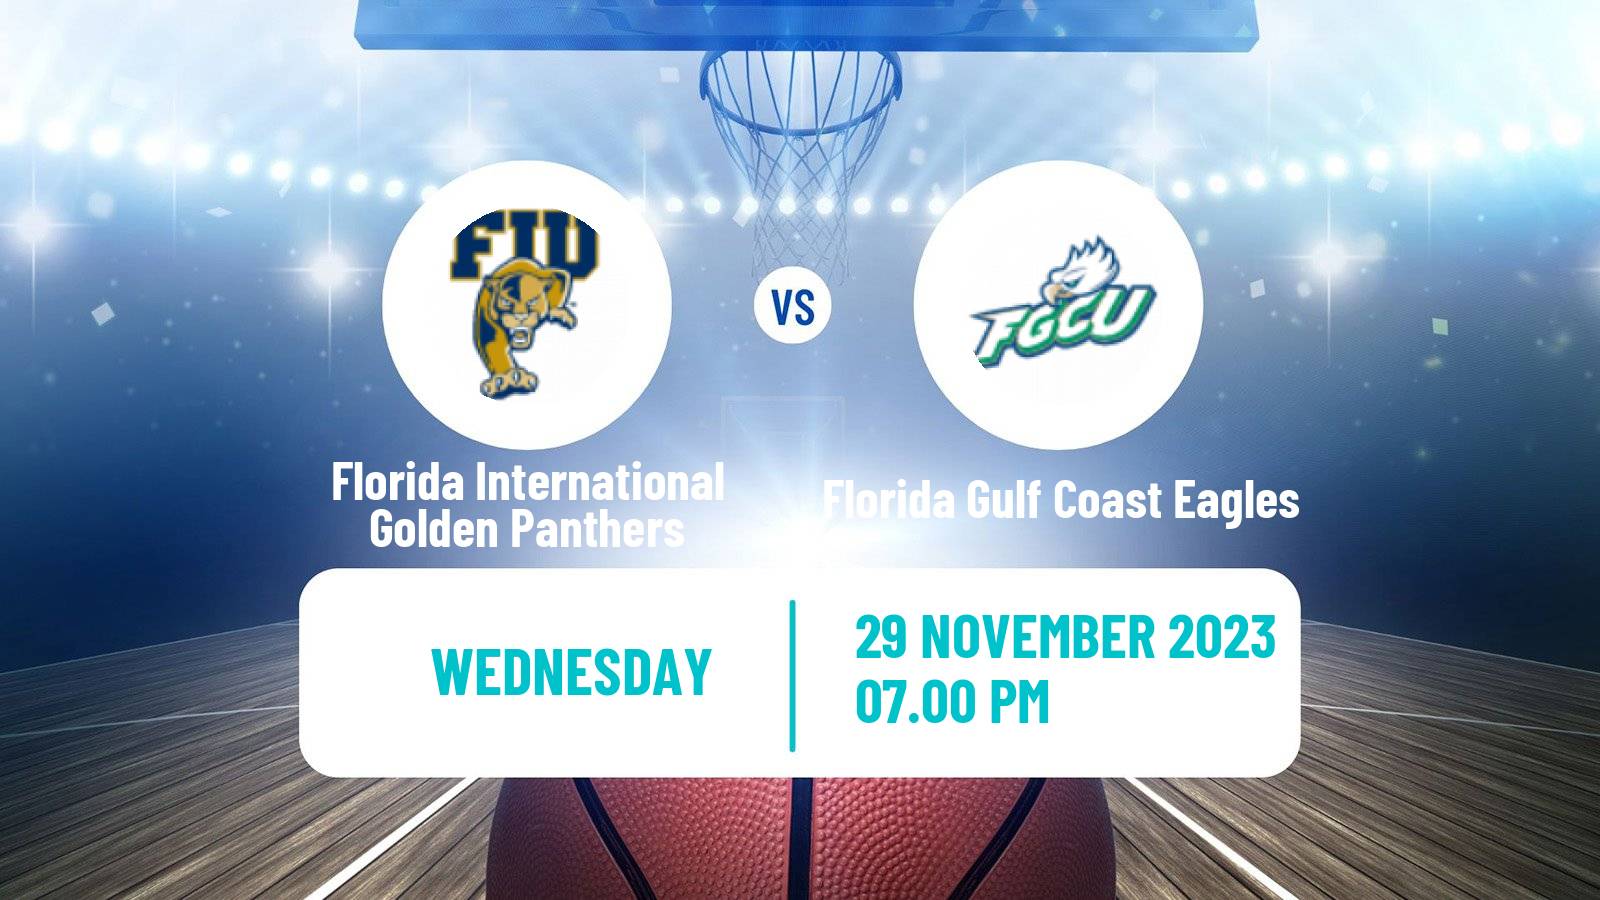 Basketball NCAA College Basketball Florida International Golden Panthers - Florida Gulf Coast Eagles